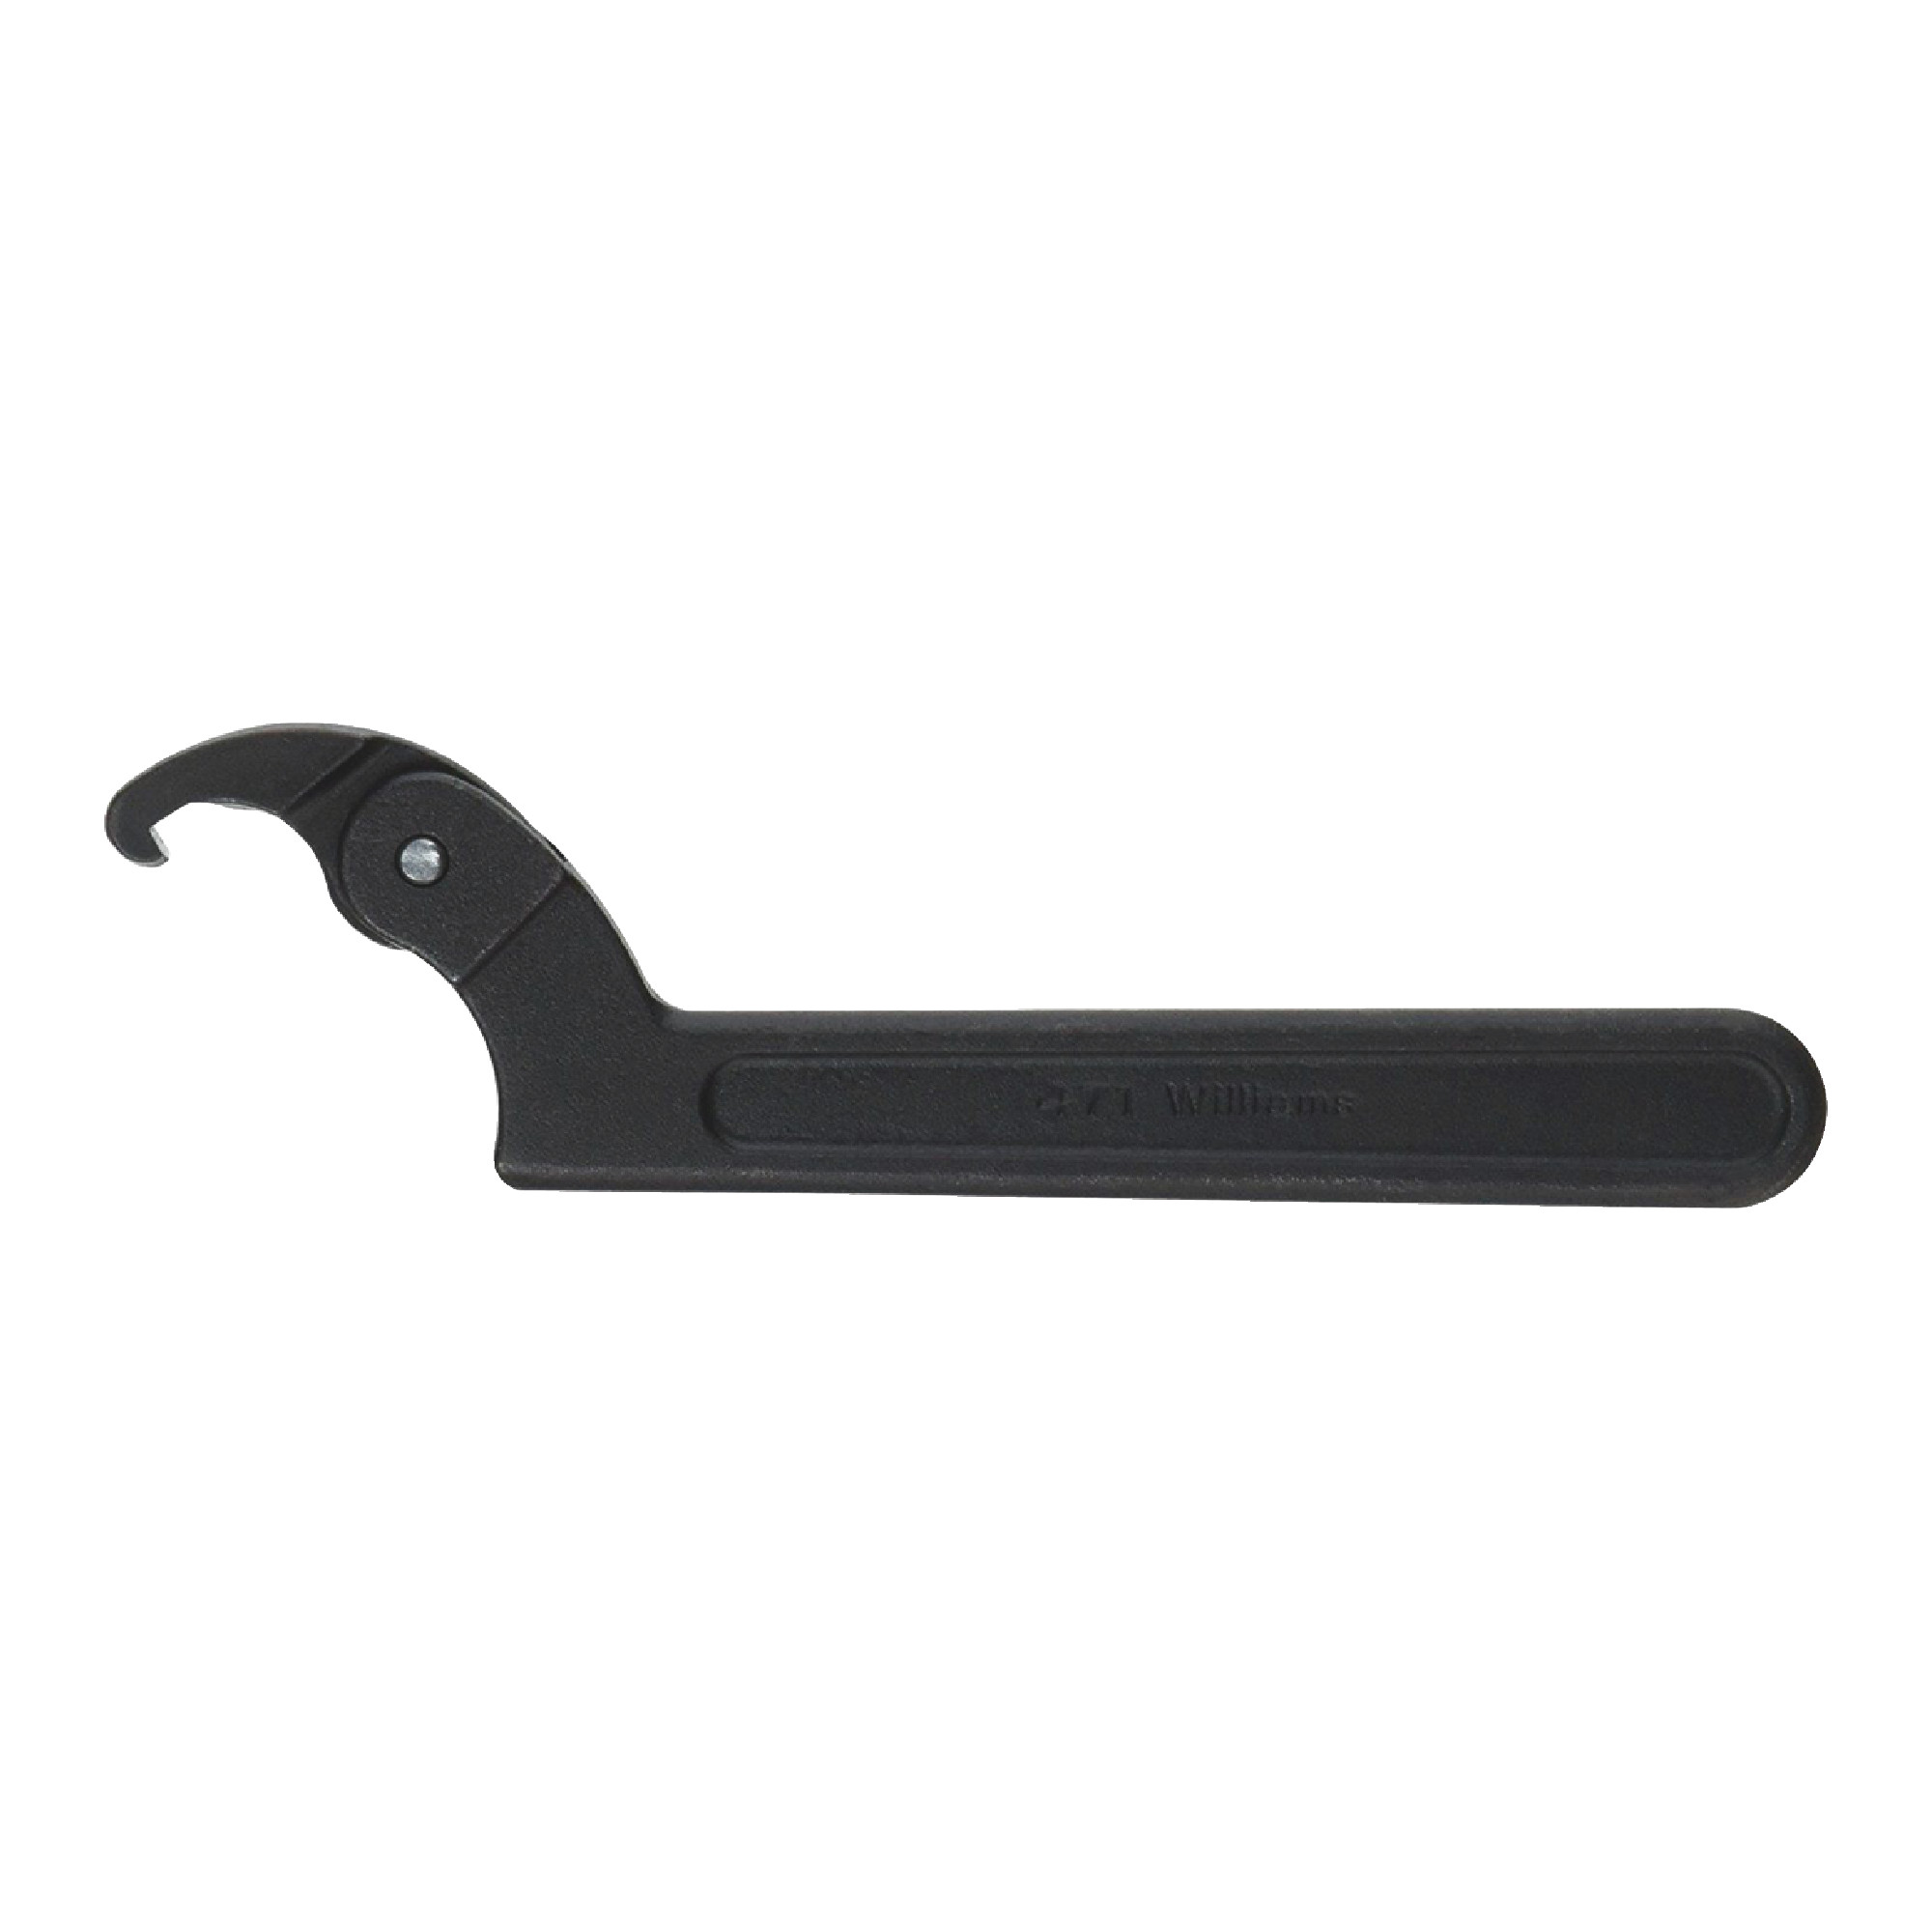 Adjustable Hook Spanner Wrench - Model: 474B  Diameter: 6-1/8" - 8-3/4"  Height: 5/16"  Overall Length: 18-1/2"